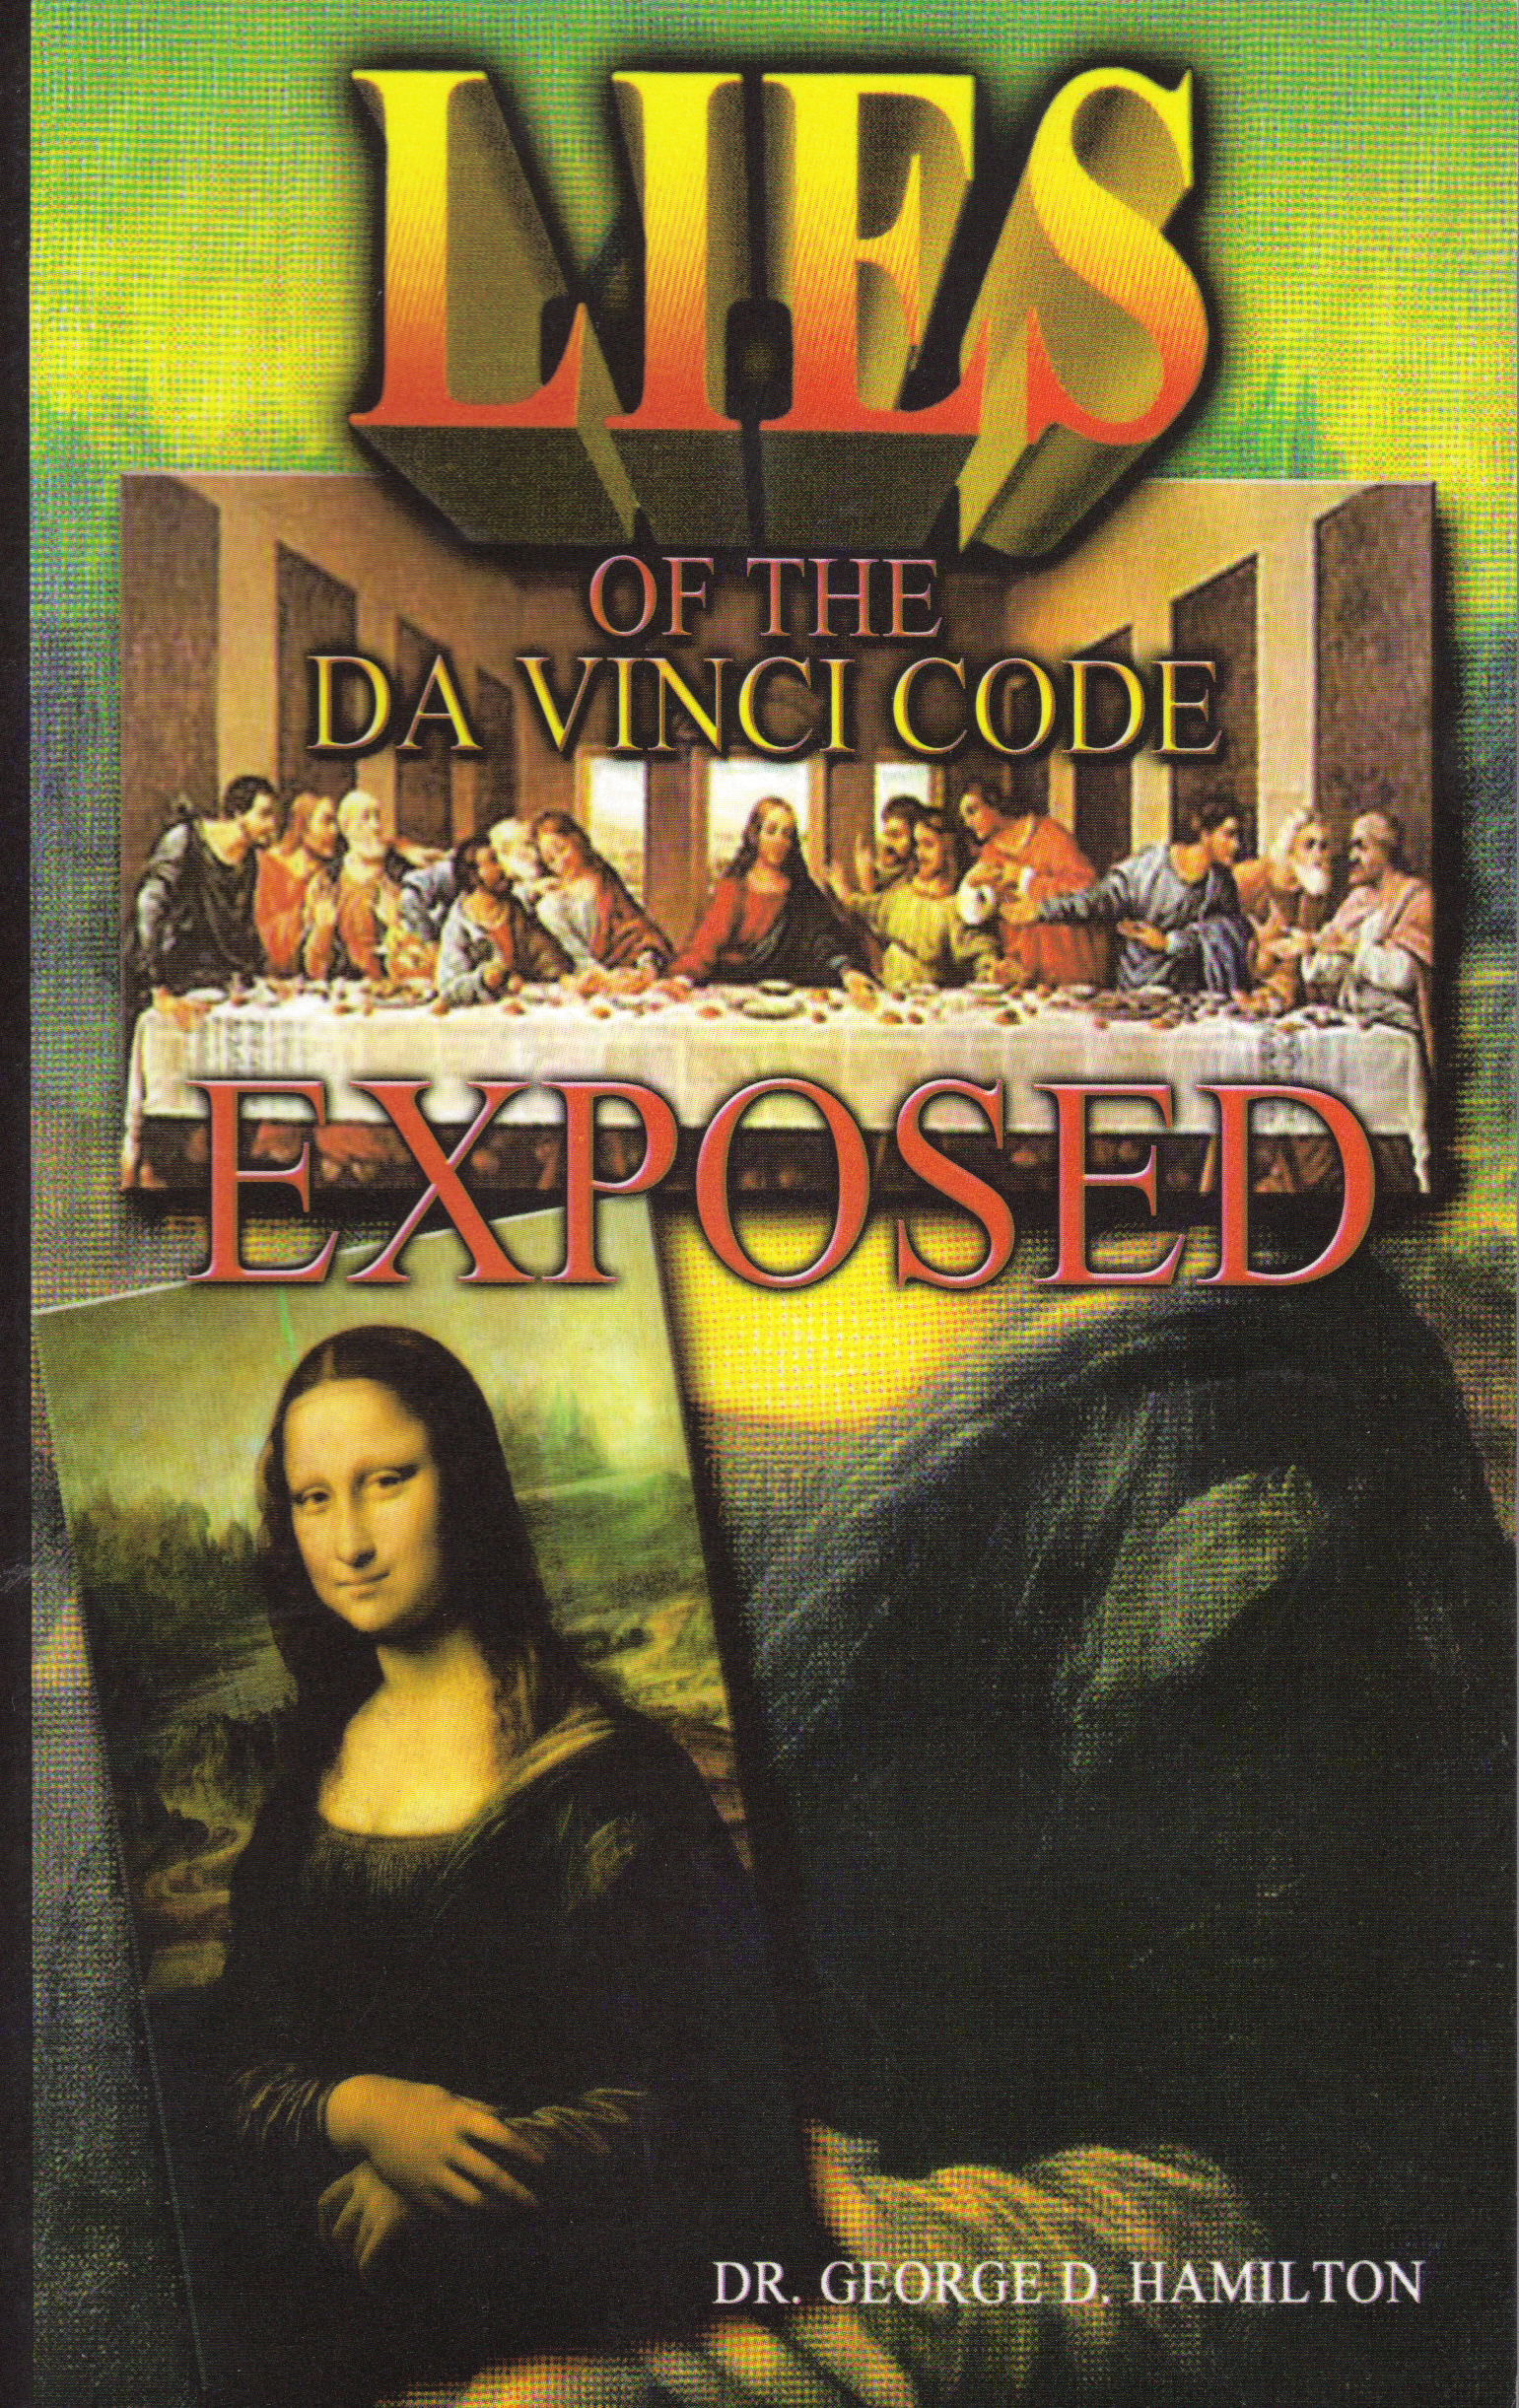 Lies of the DaVinci Code